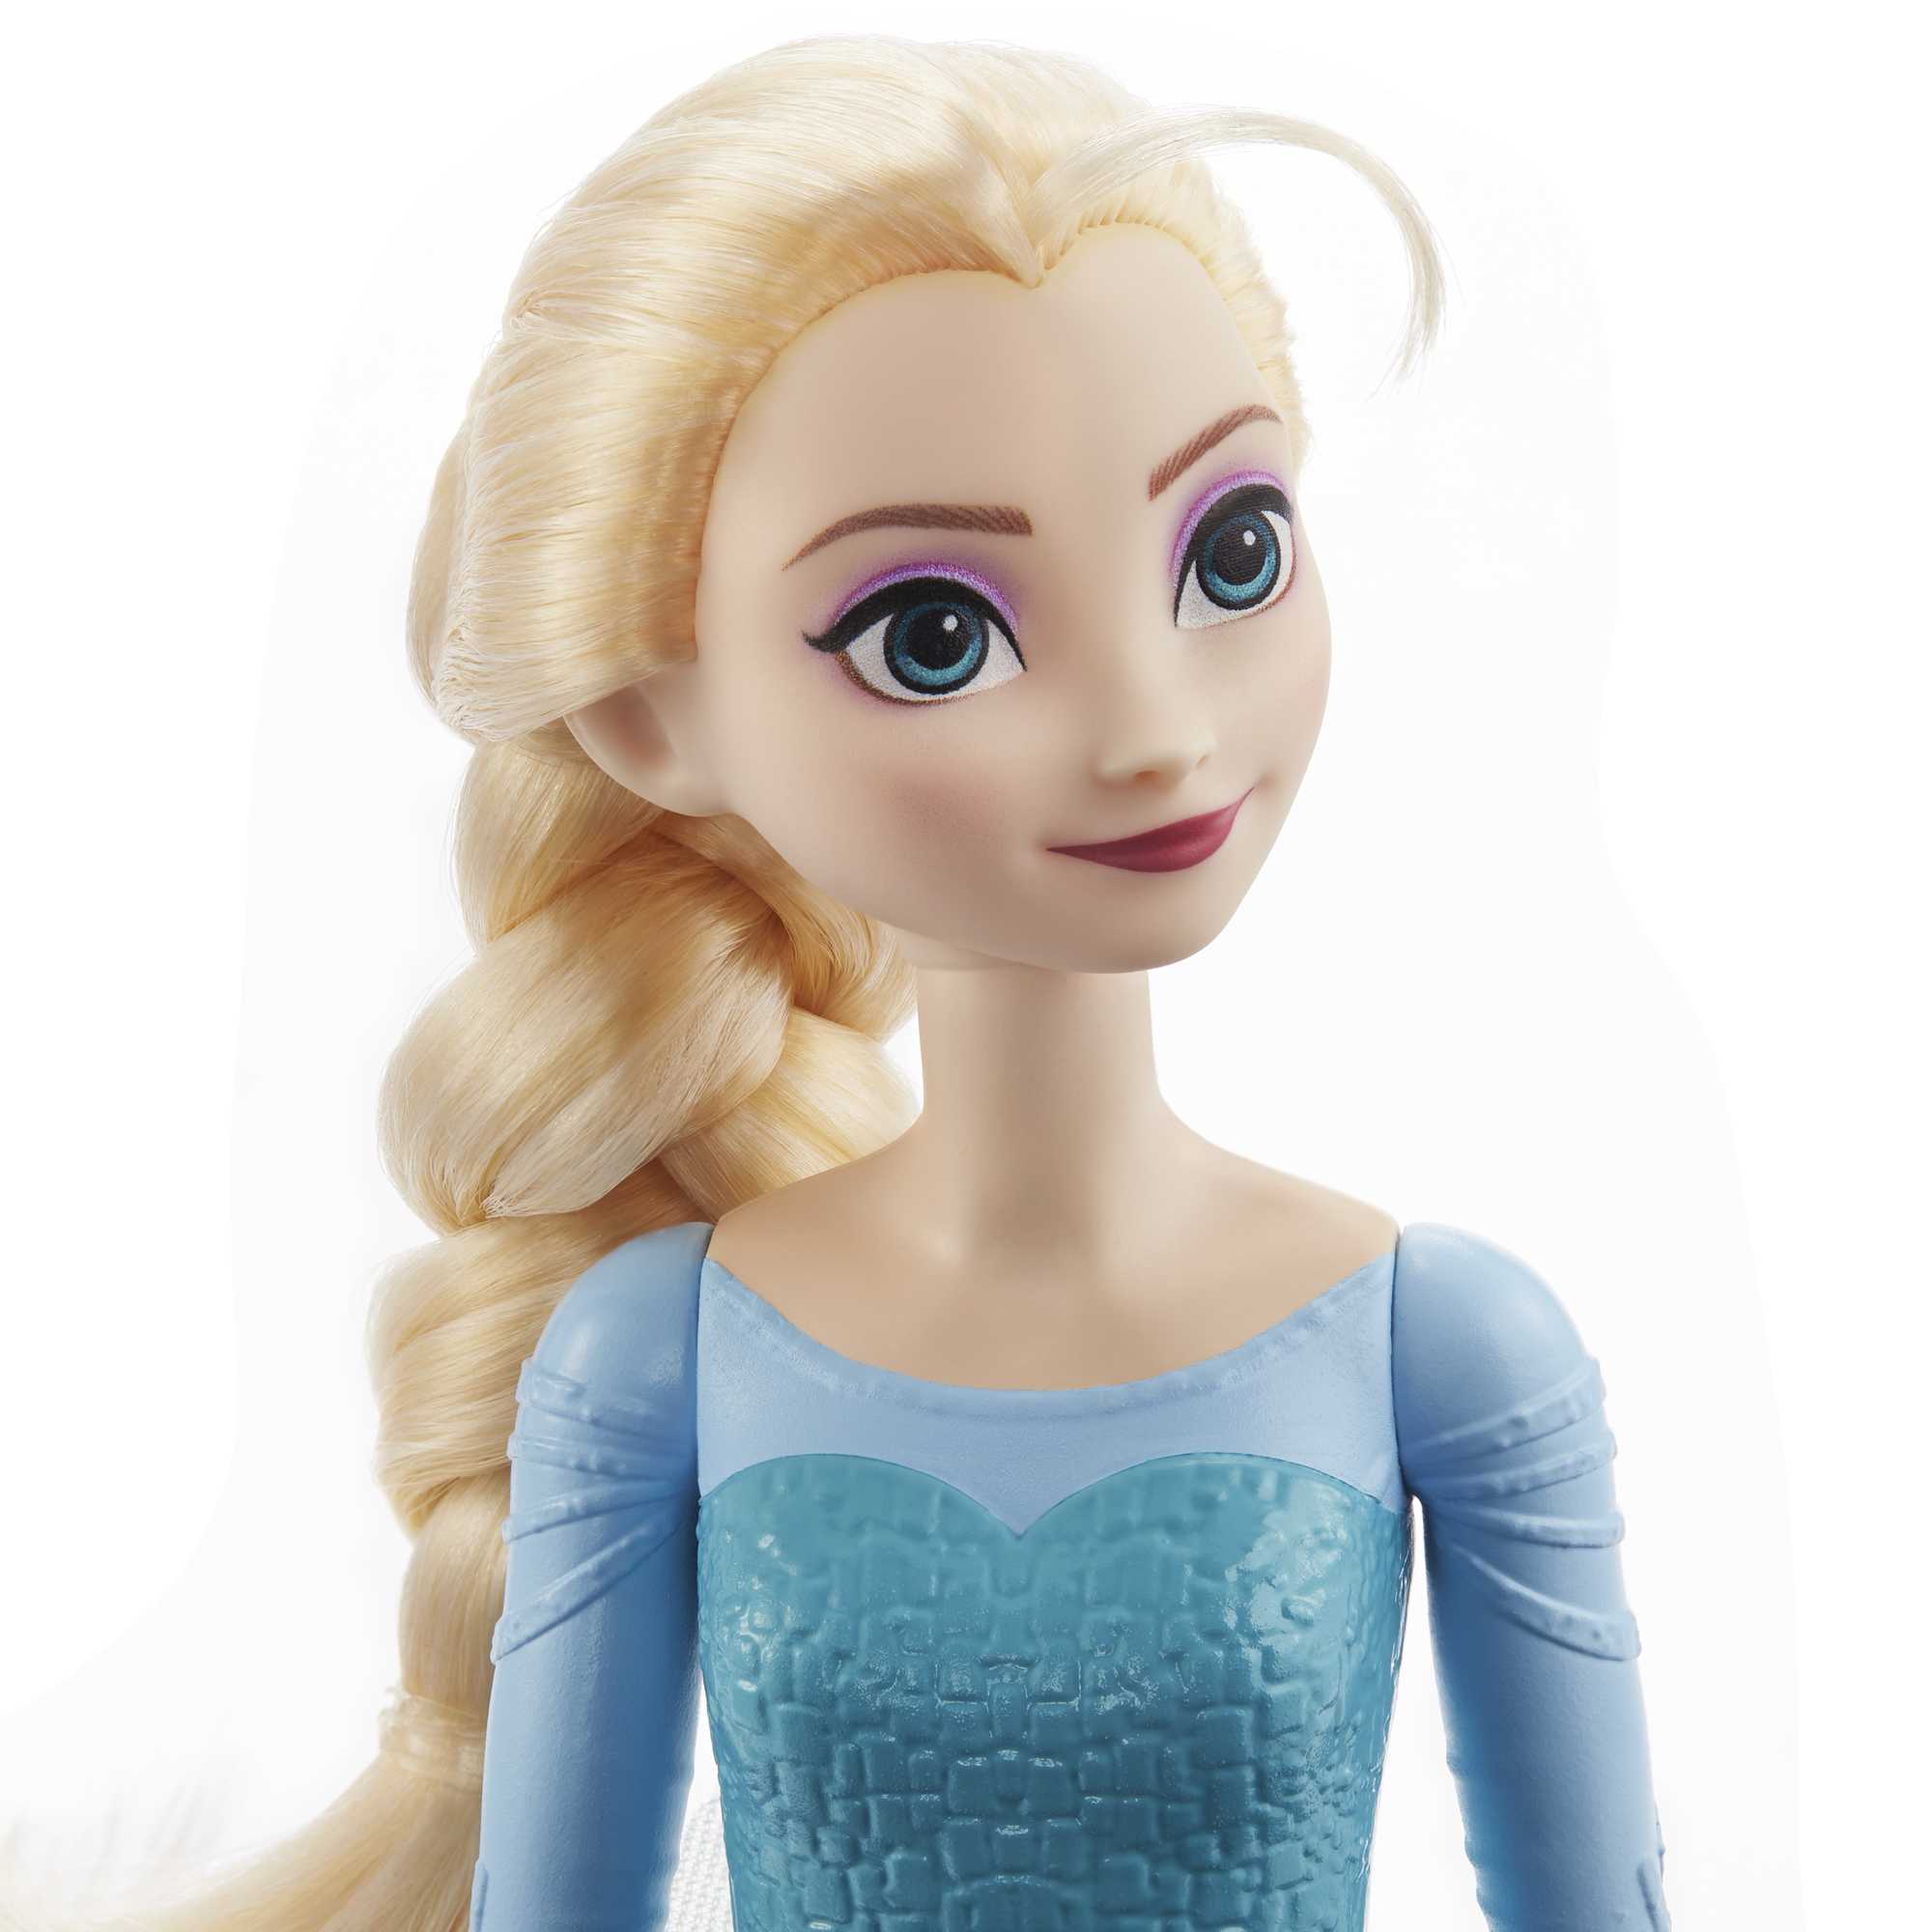 Disney Frozen Gift Ideas  Disney frozen gift, Disney frozen dolls, Elsa  doll